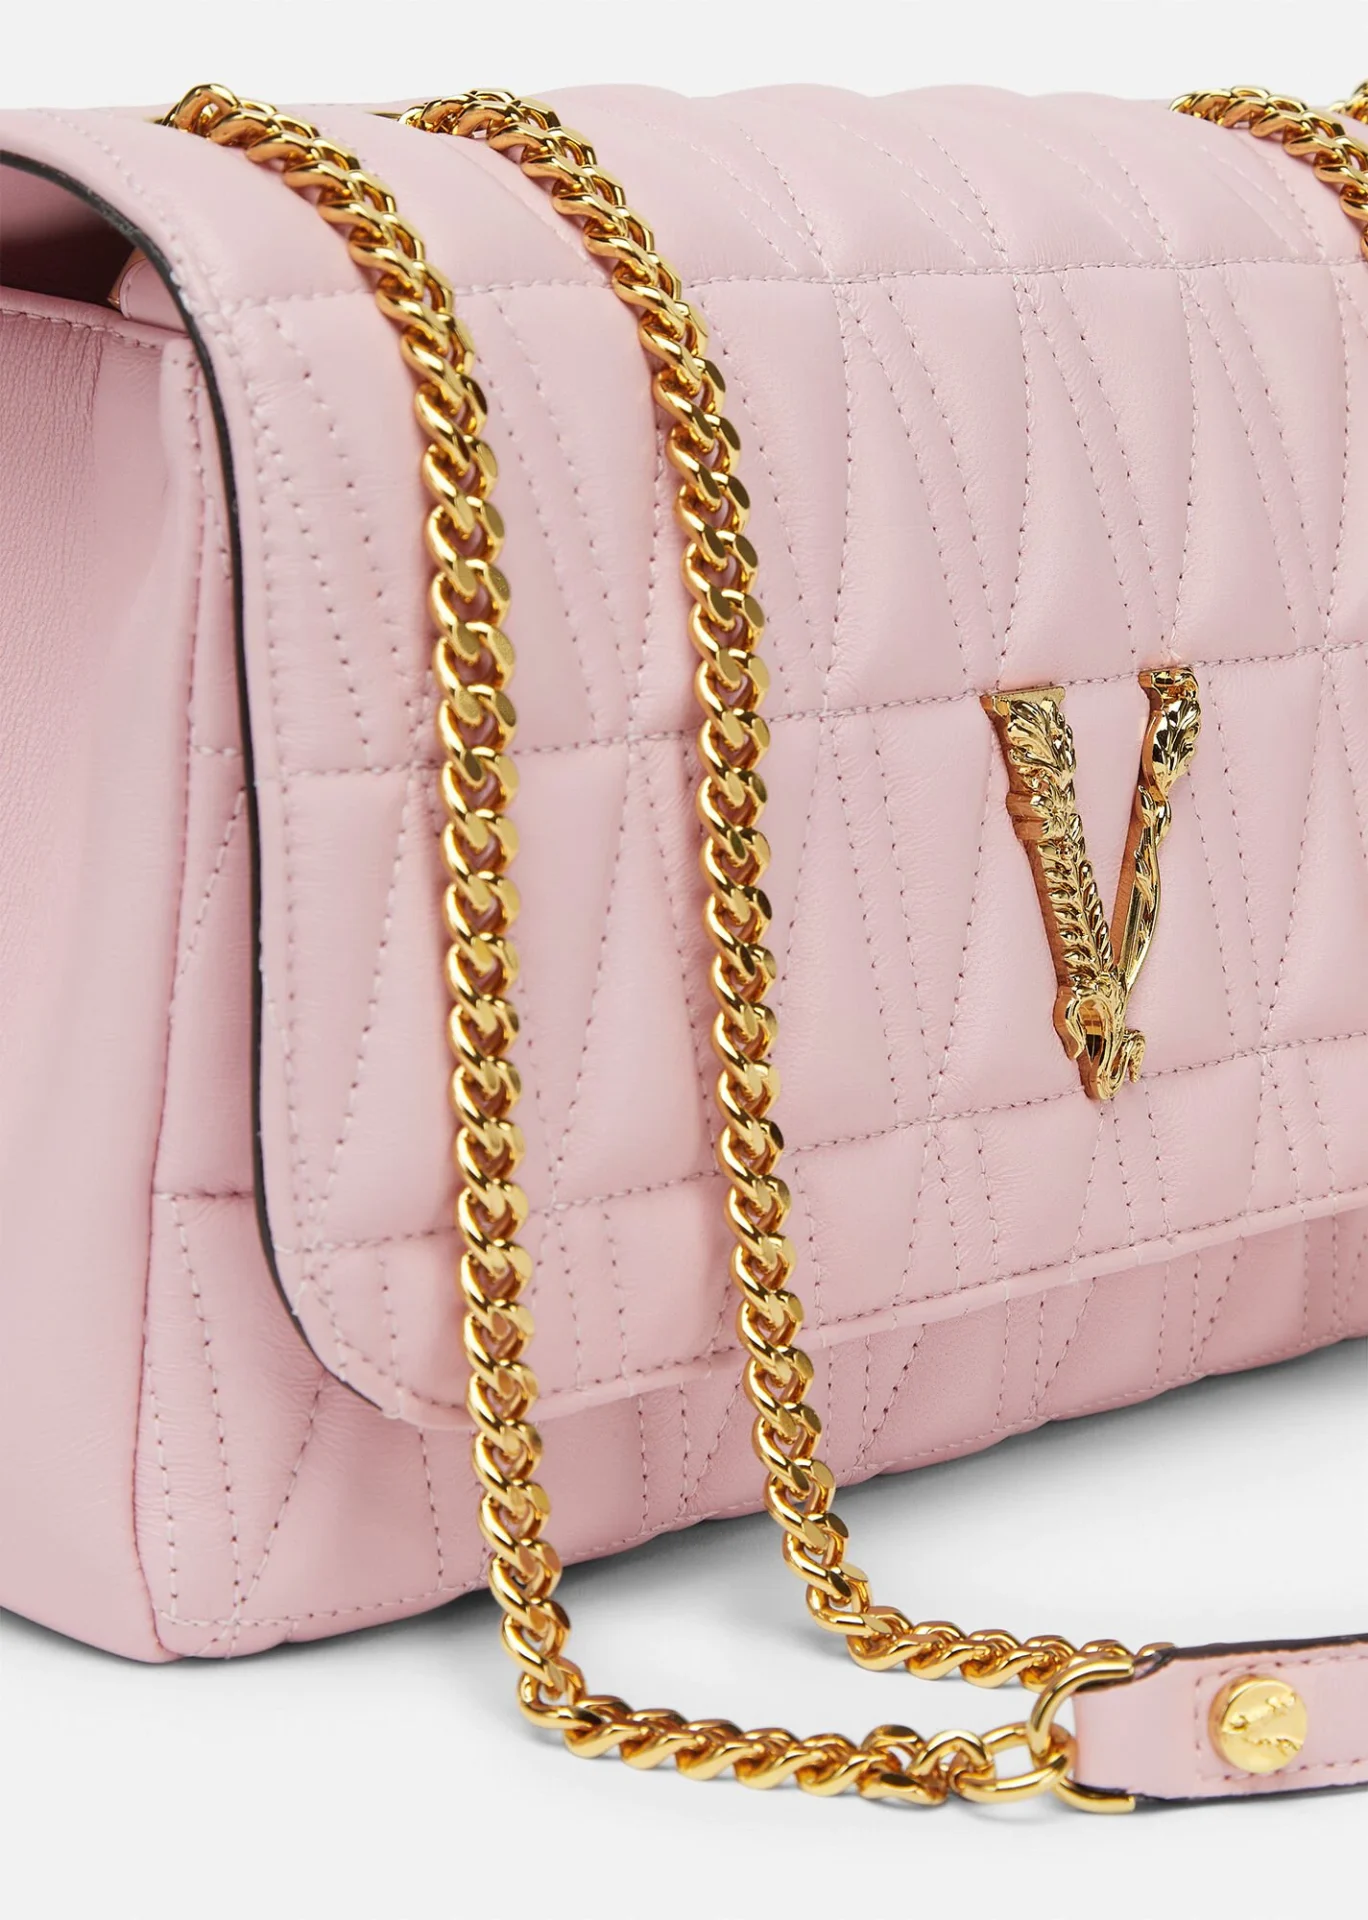 Versace Virtus Quilted Shoulder Bag White